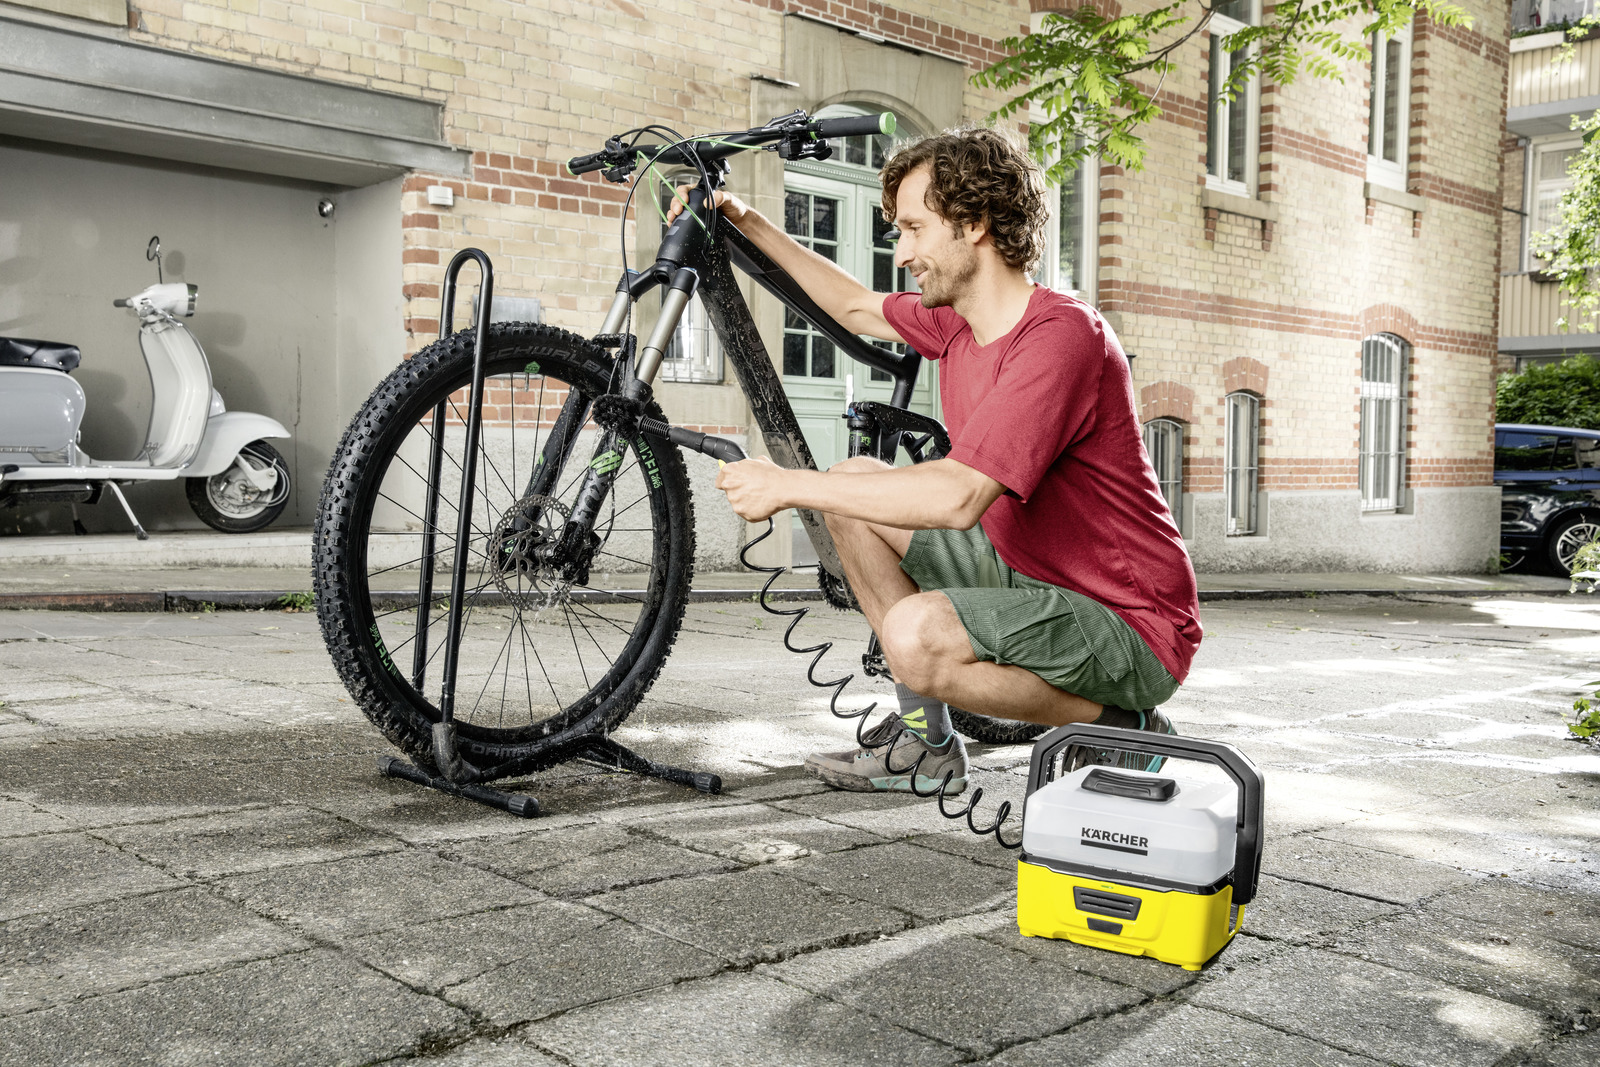 KÄRCHER Cleaning Device OC3 + Bikebox, 184,50 €